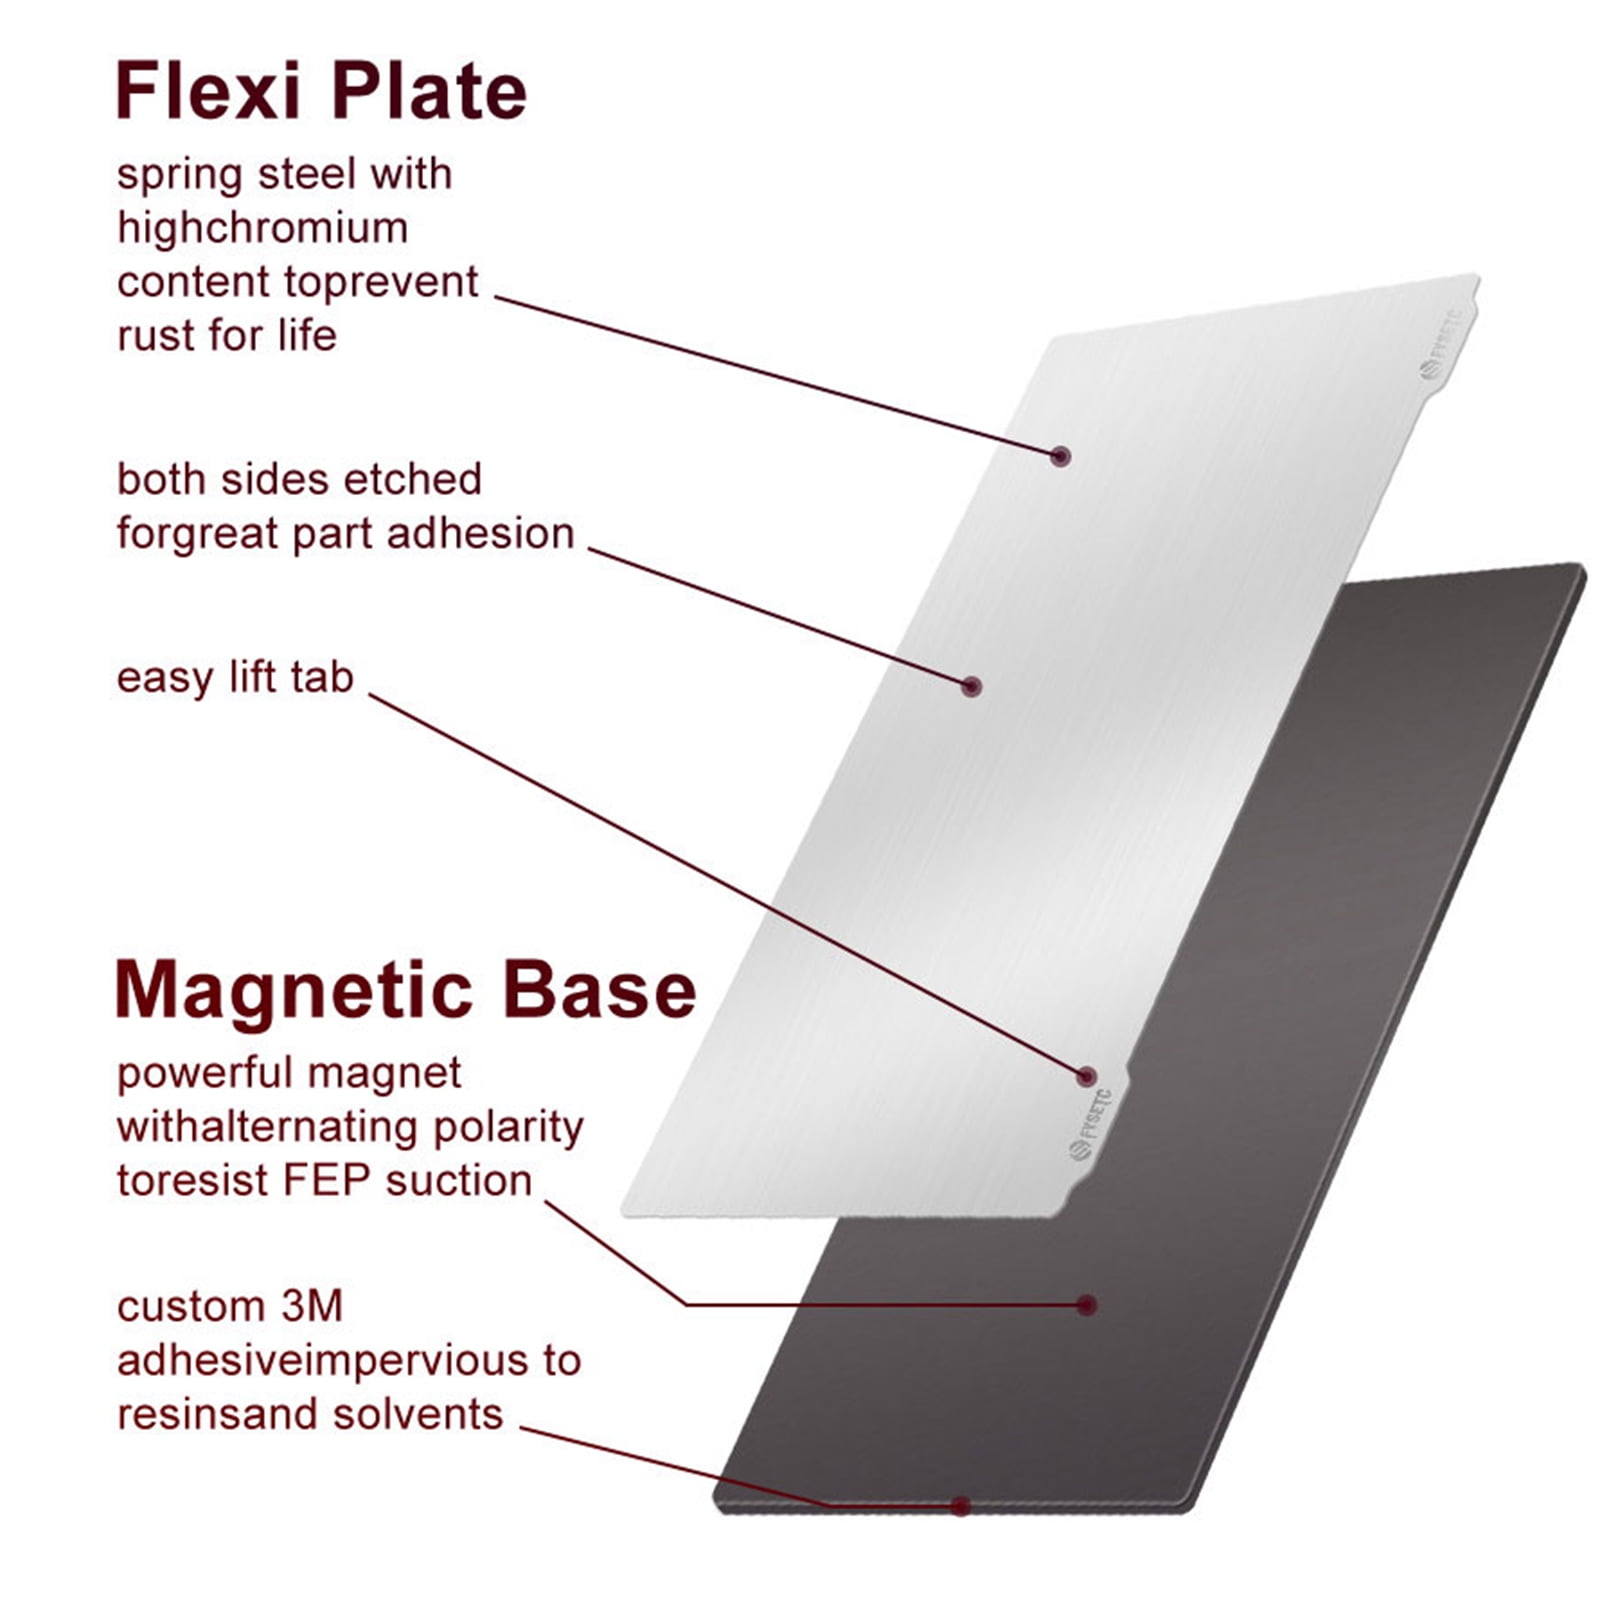 figatia 196X126mm SLA//DLP Light-Cured Flex Plate Photosensitive Platform Magnetic Sticker